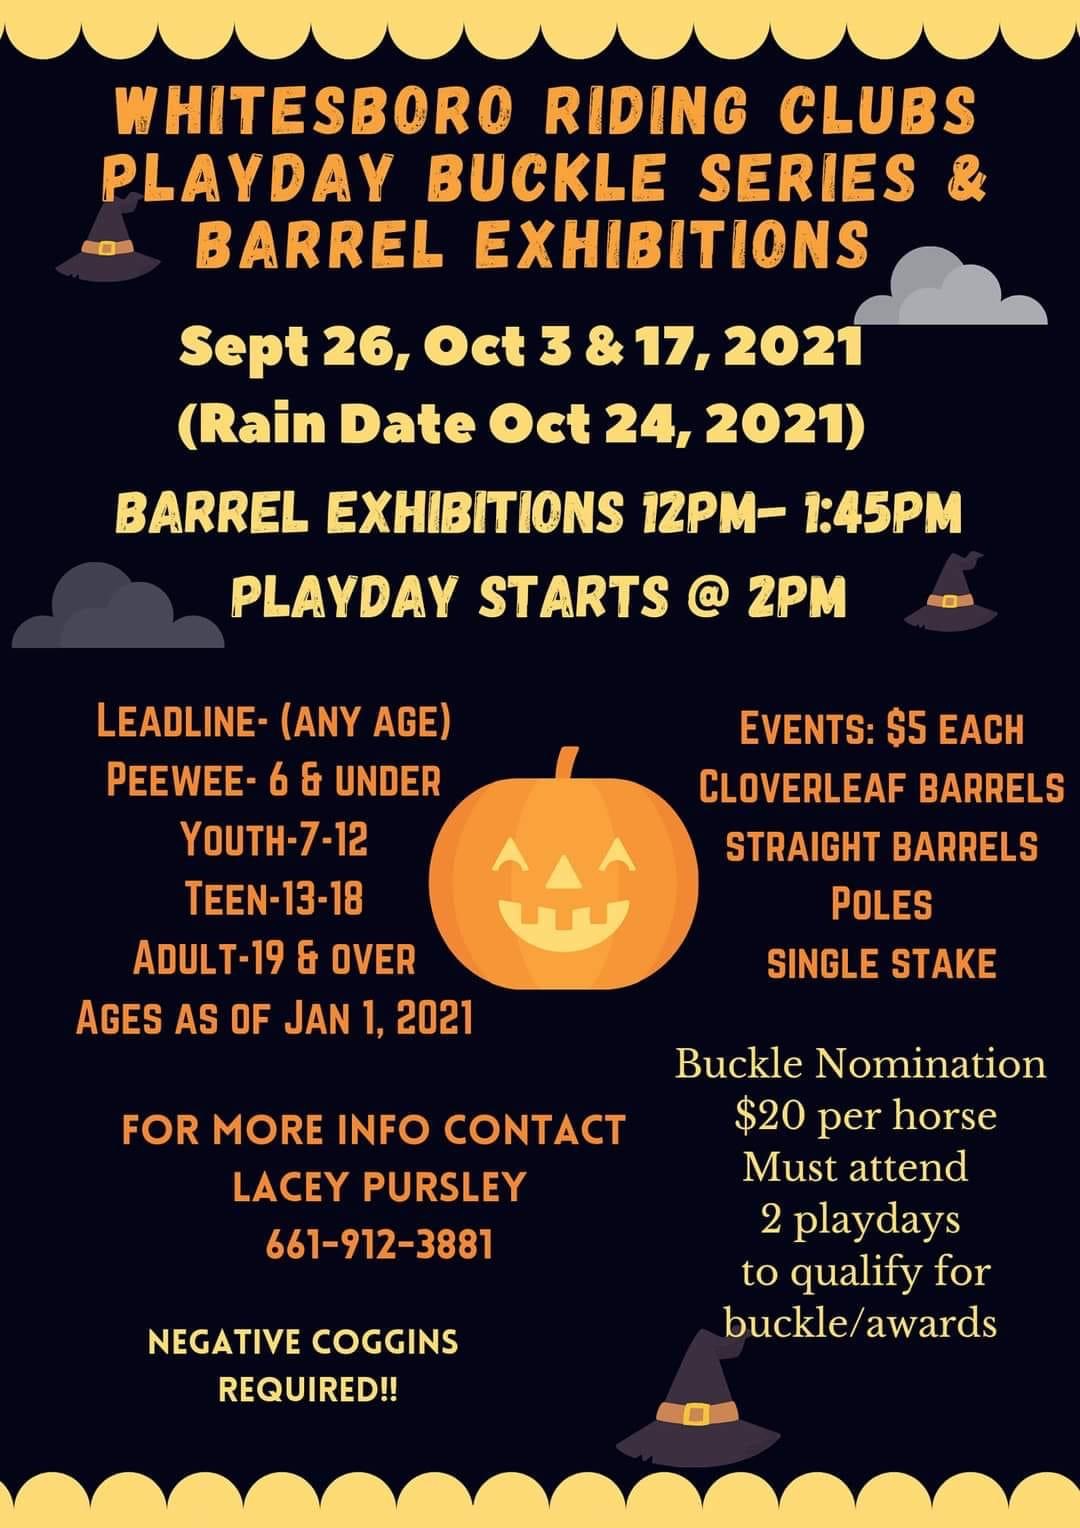 Playday Buckle Series & Barrel Exhibitions